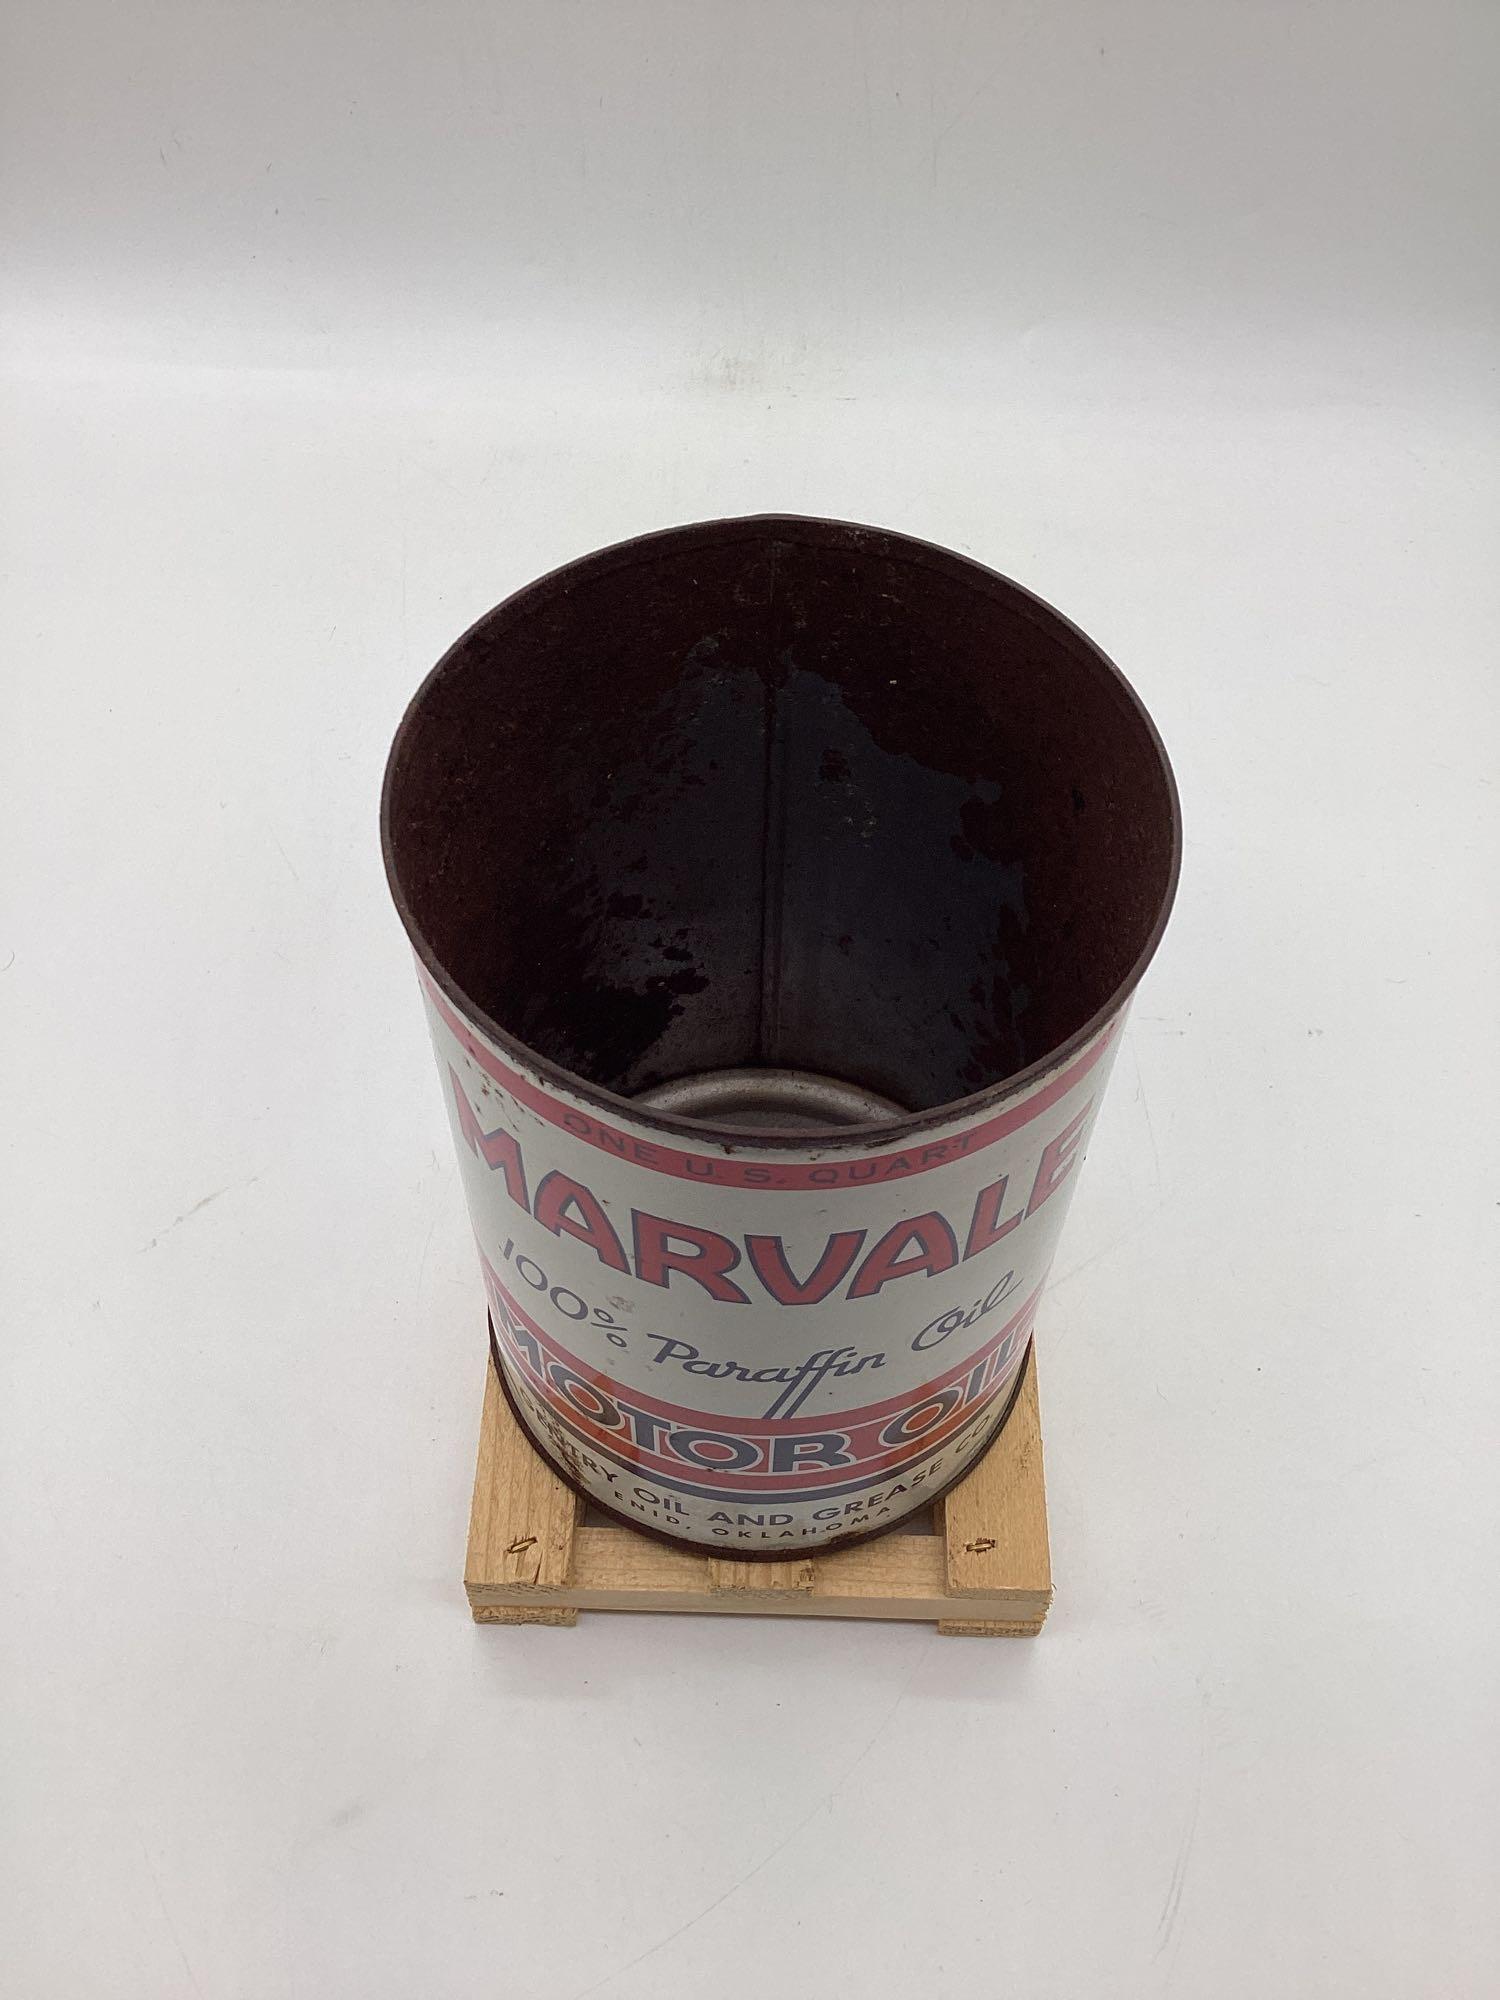 Marvale Quart Oil Can Enid, OK